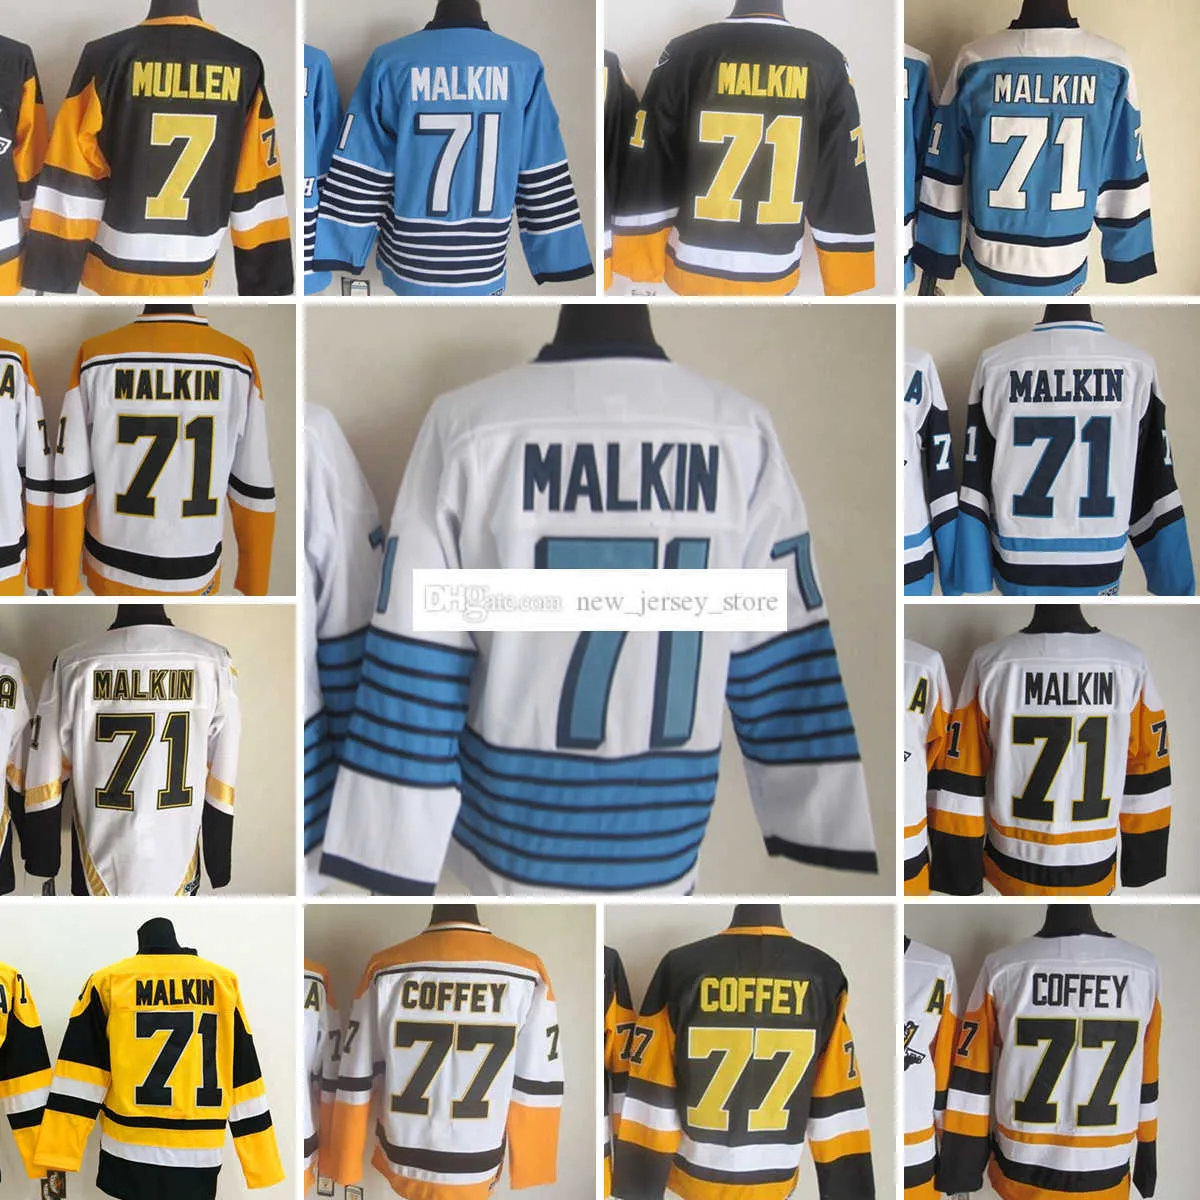 1967-1999 Movie Retro CCM Hockey Jersey Embroidery 71 EvgeniMalkin 77 PaulCoffey 7 JoeMullen Vintage Jerseys White Black Yellow Blue